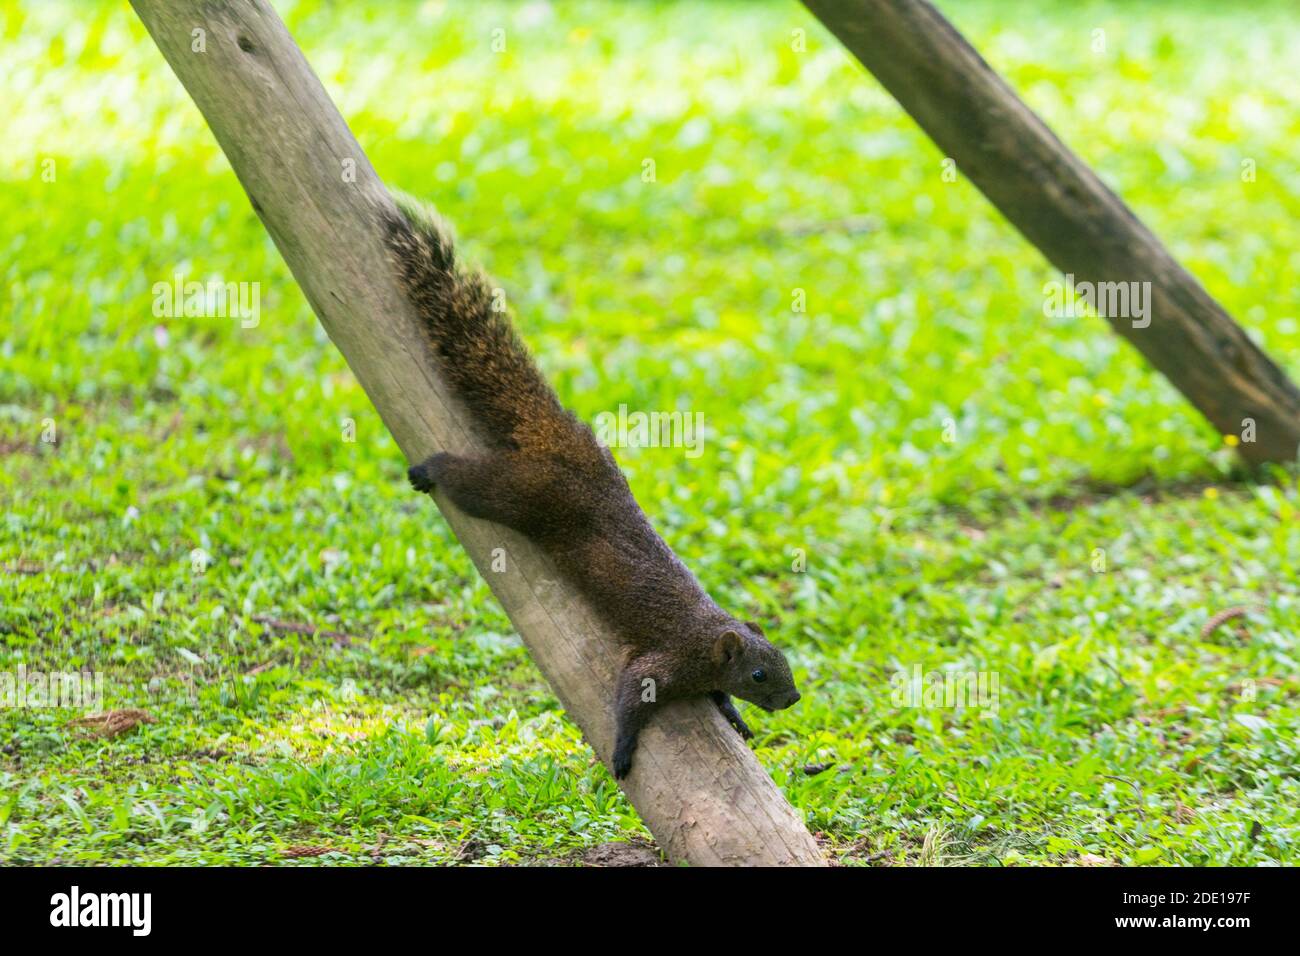 A squirrel found at the Chiang Kai-shek Memorial Hall Park in Taipei, Taiwan Stock Photo